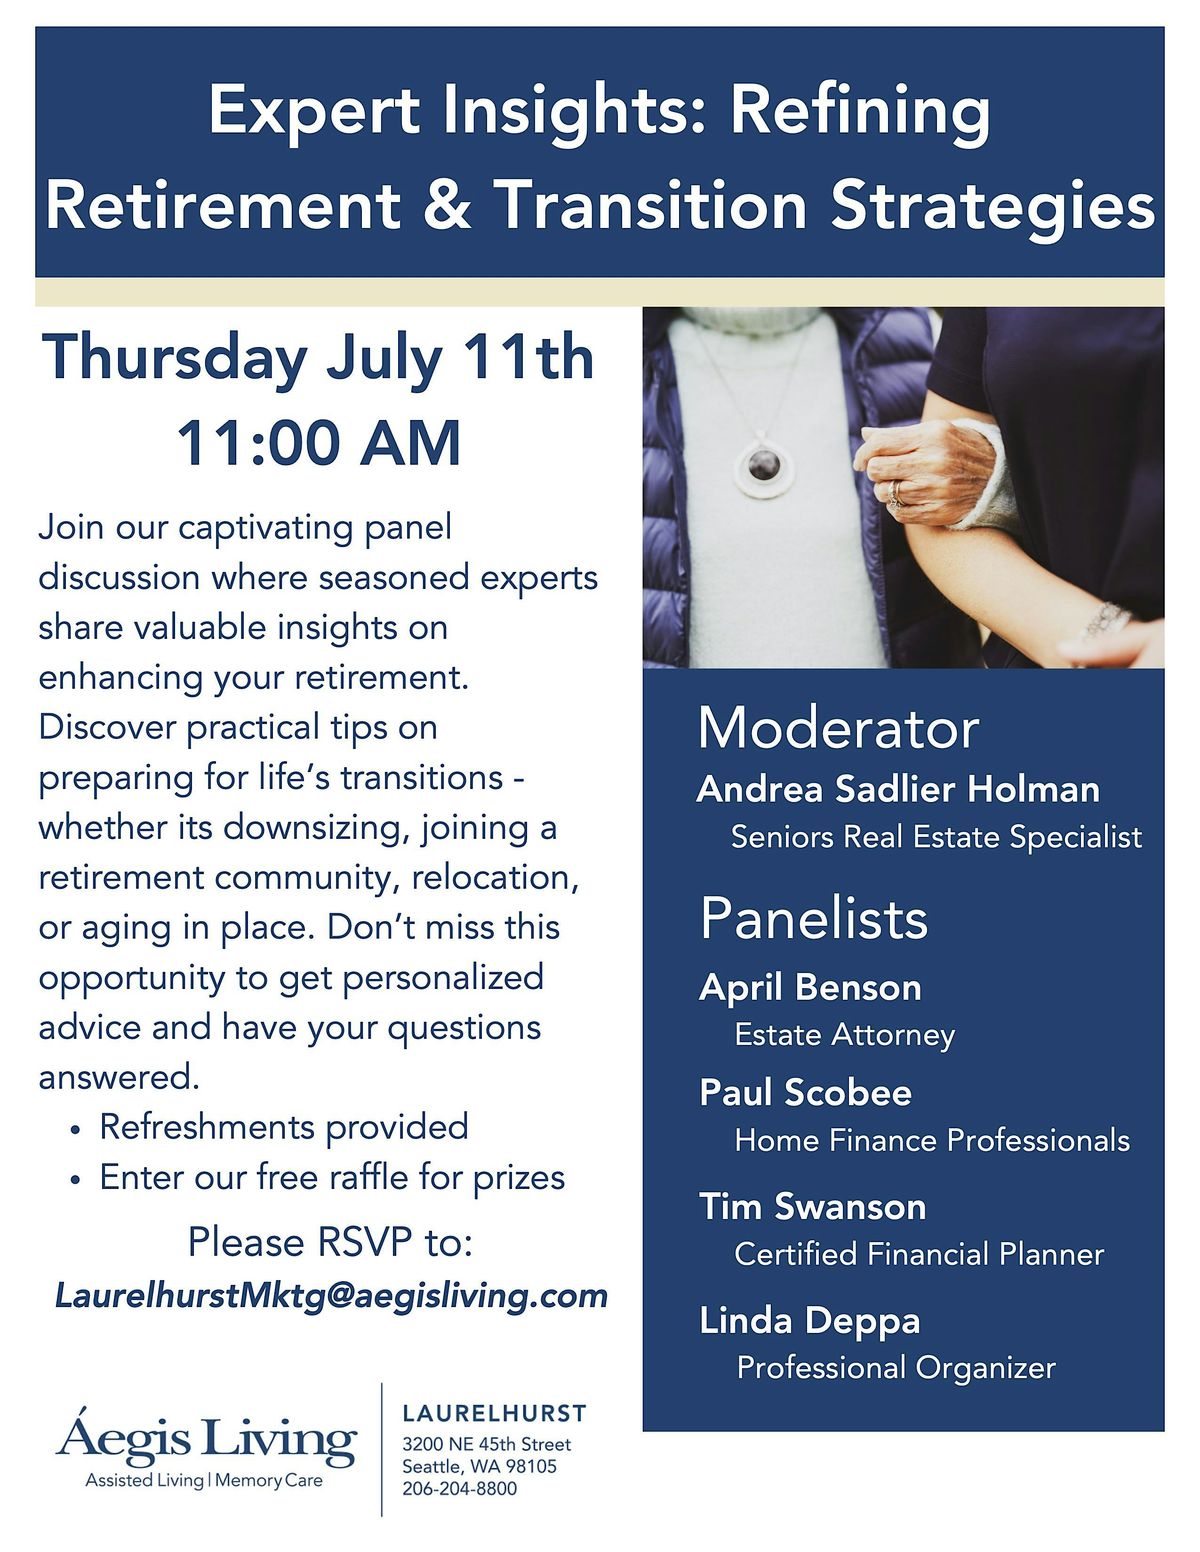 Expert Insights: Refining Retirement and Transition Preparedness